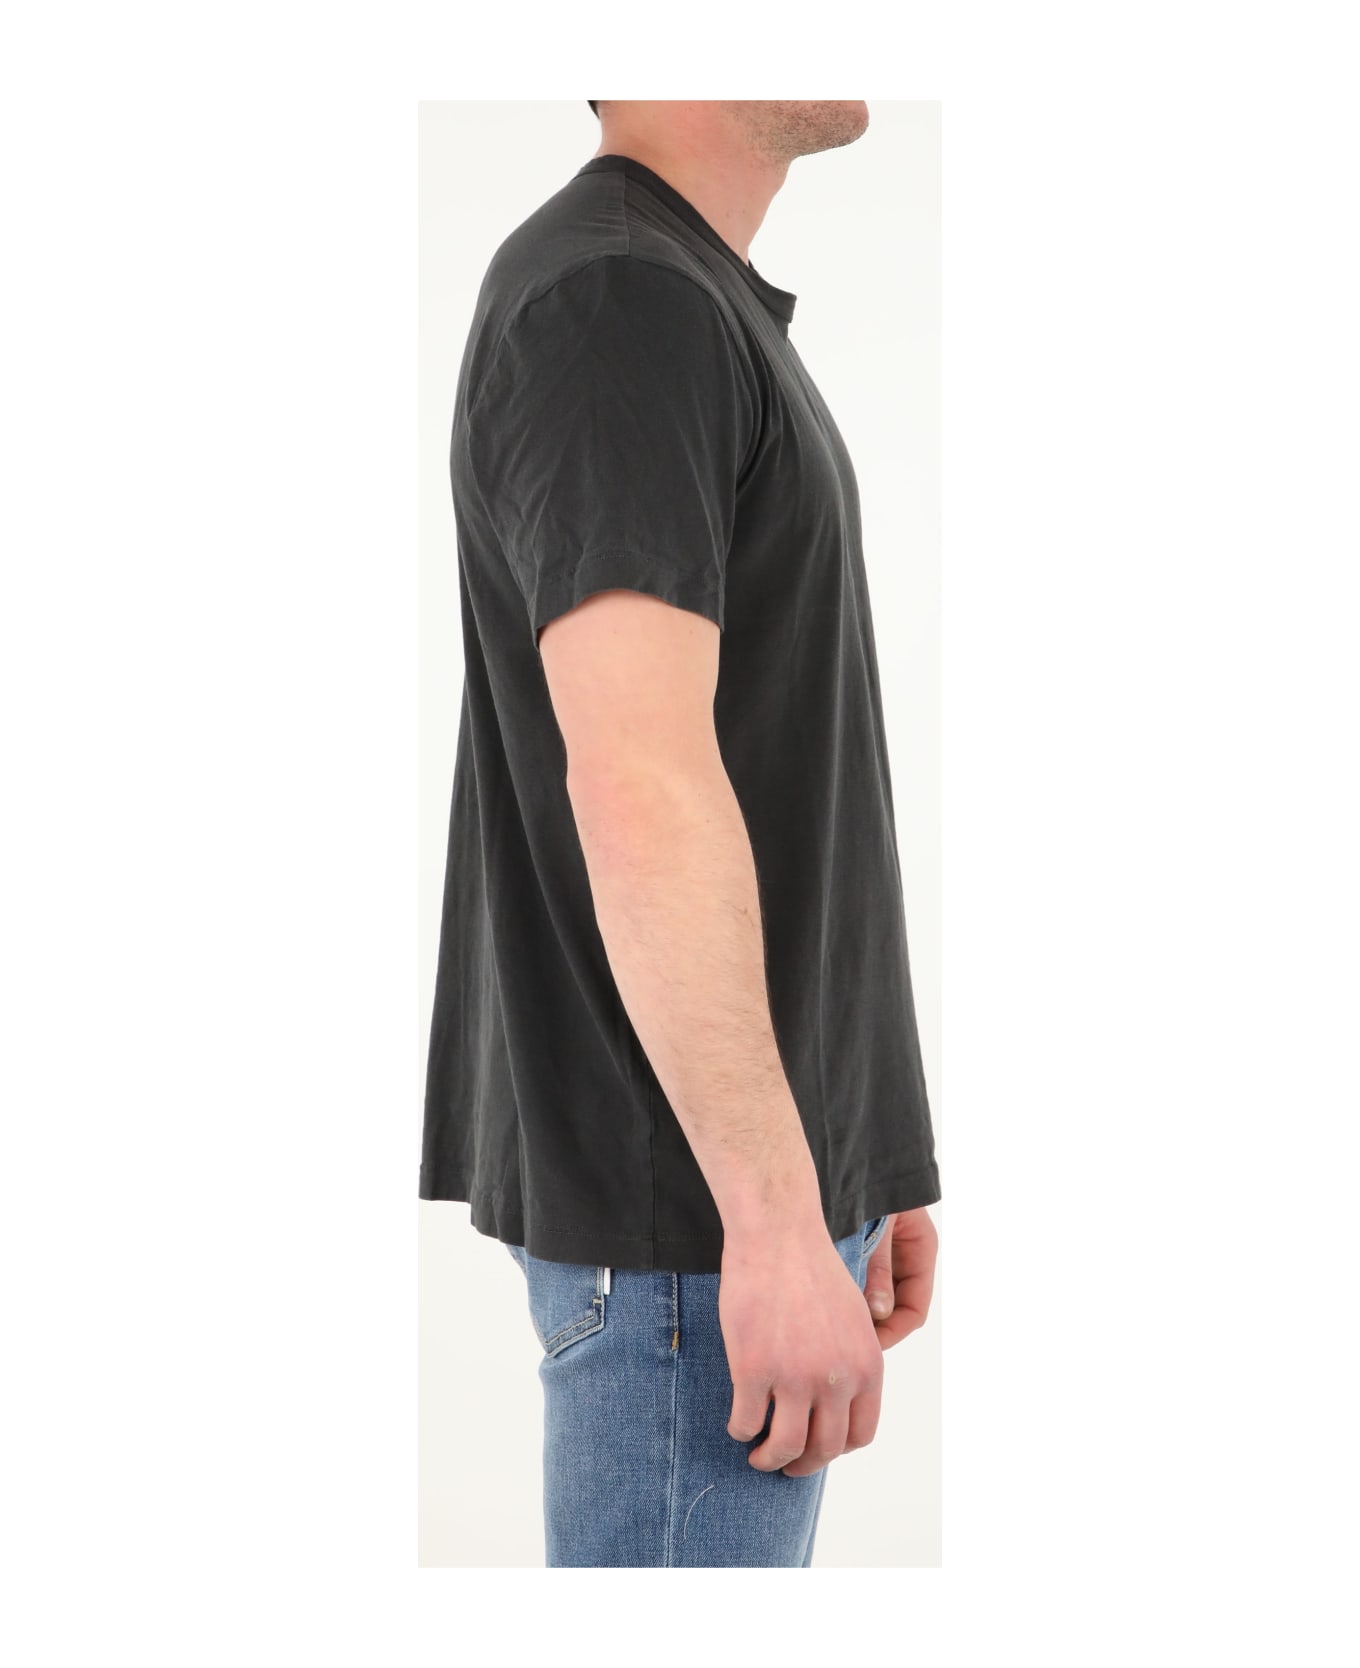 James Perse Lead Grey Cotton T-shirt - BLACK